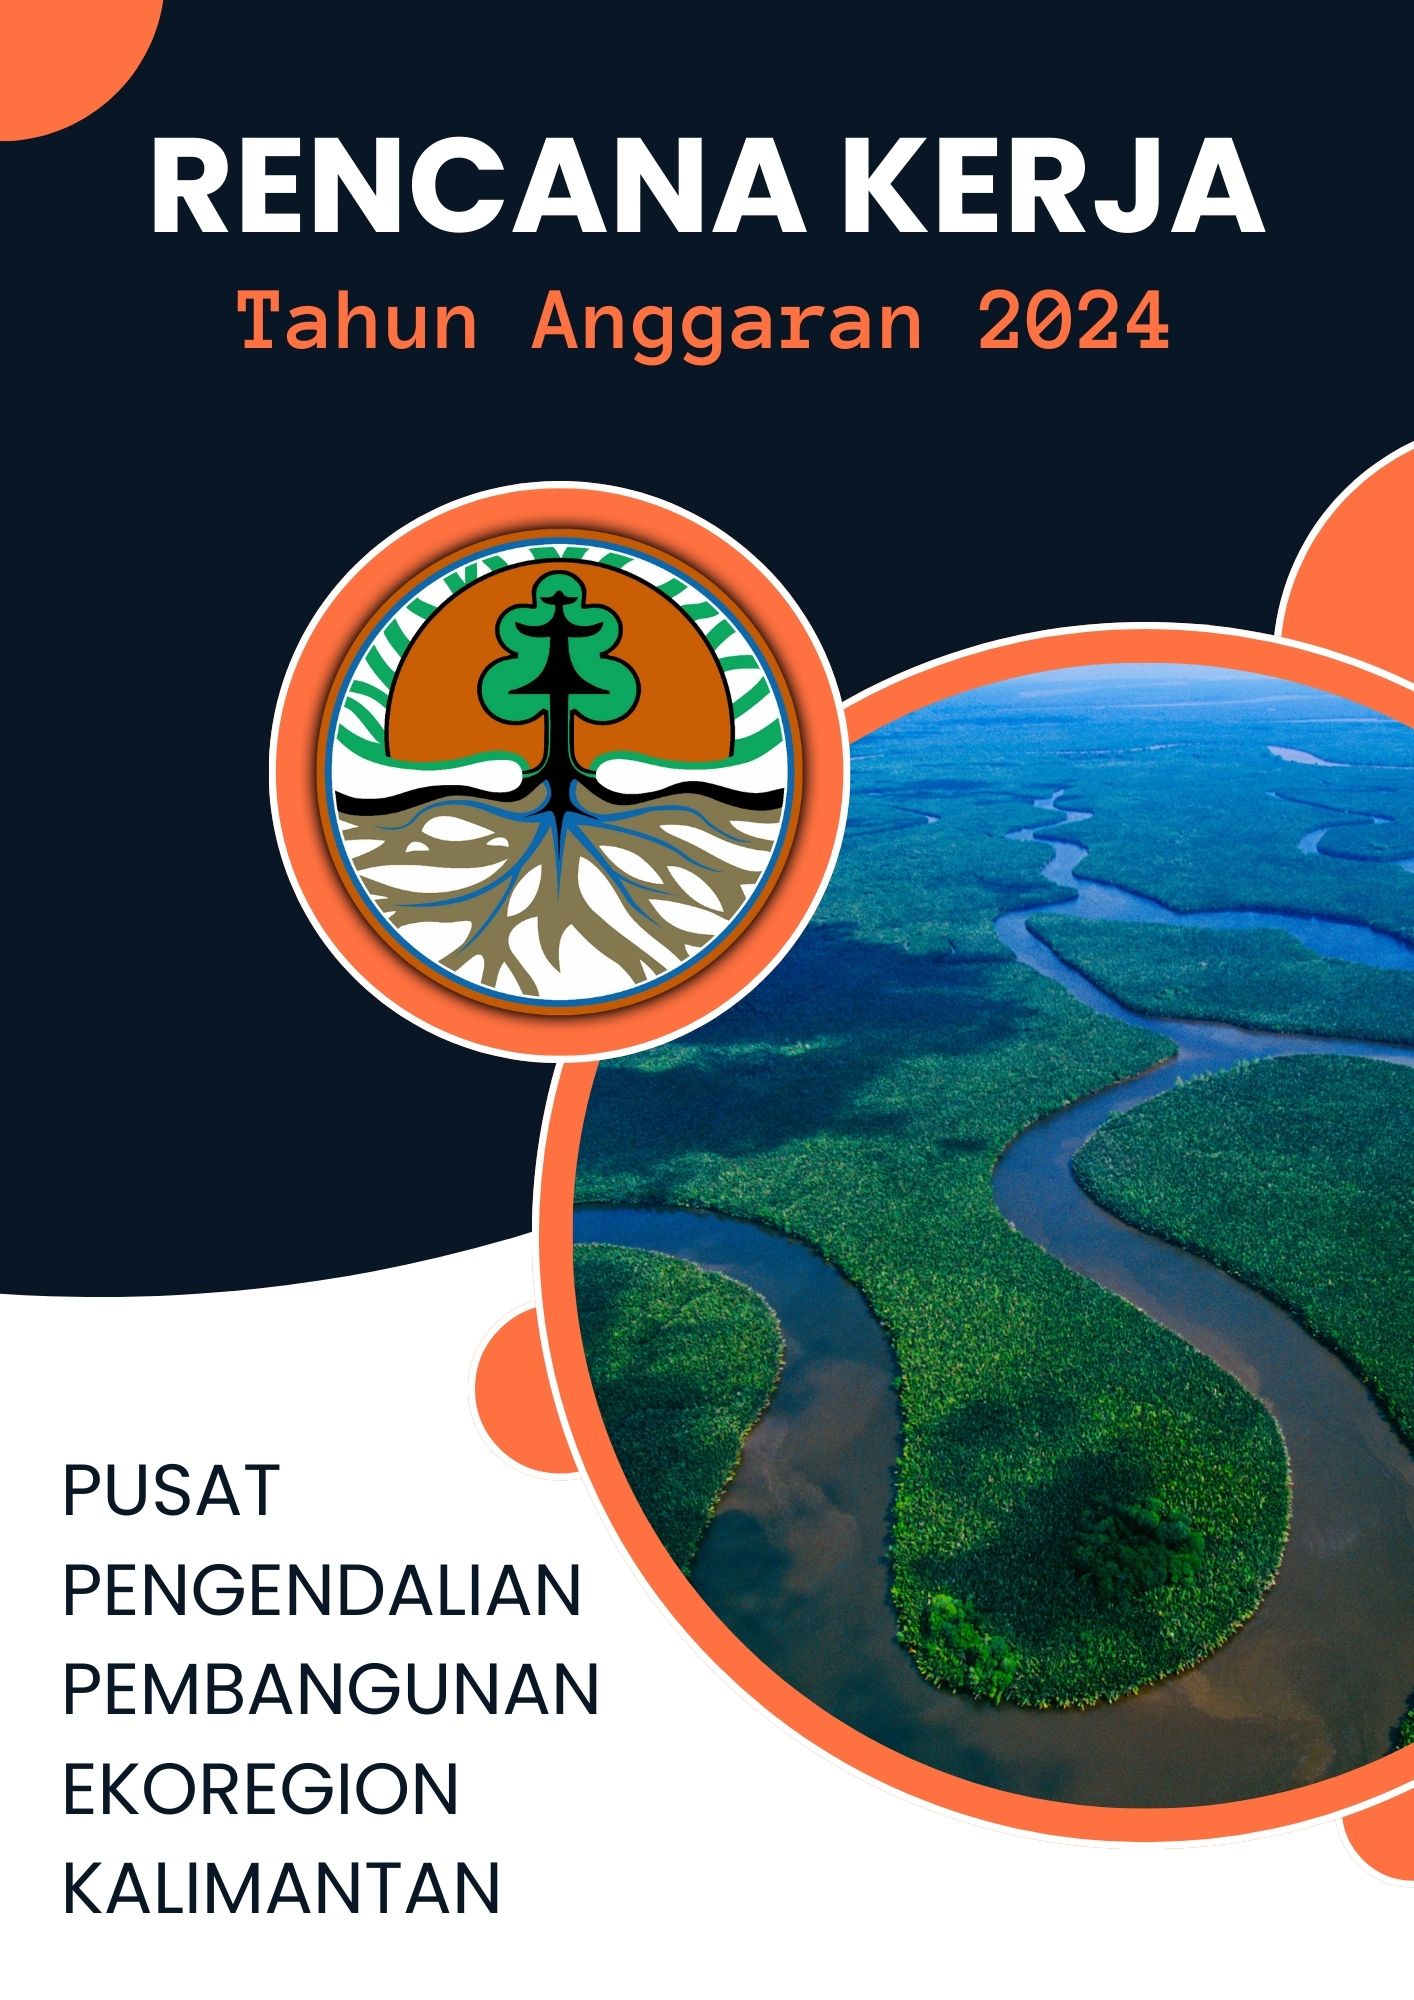 You are currently viewing Rencana Kerja P3E Kalimantan Tahun Anggaran 2024